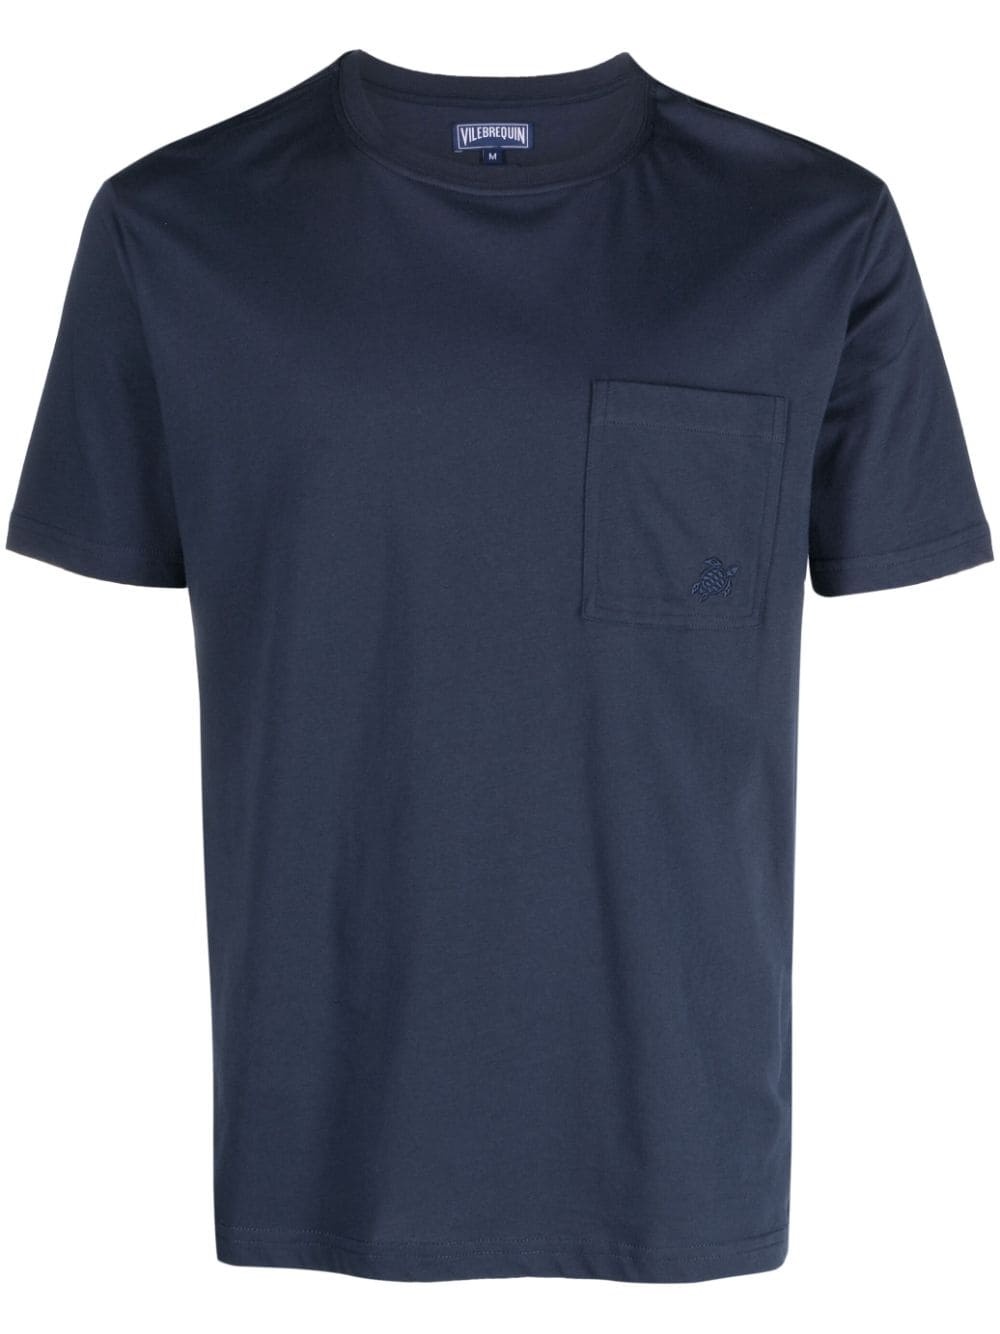 Titus round-neck cotton T-shirt - 1